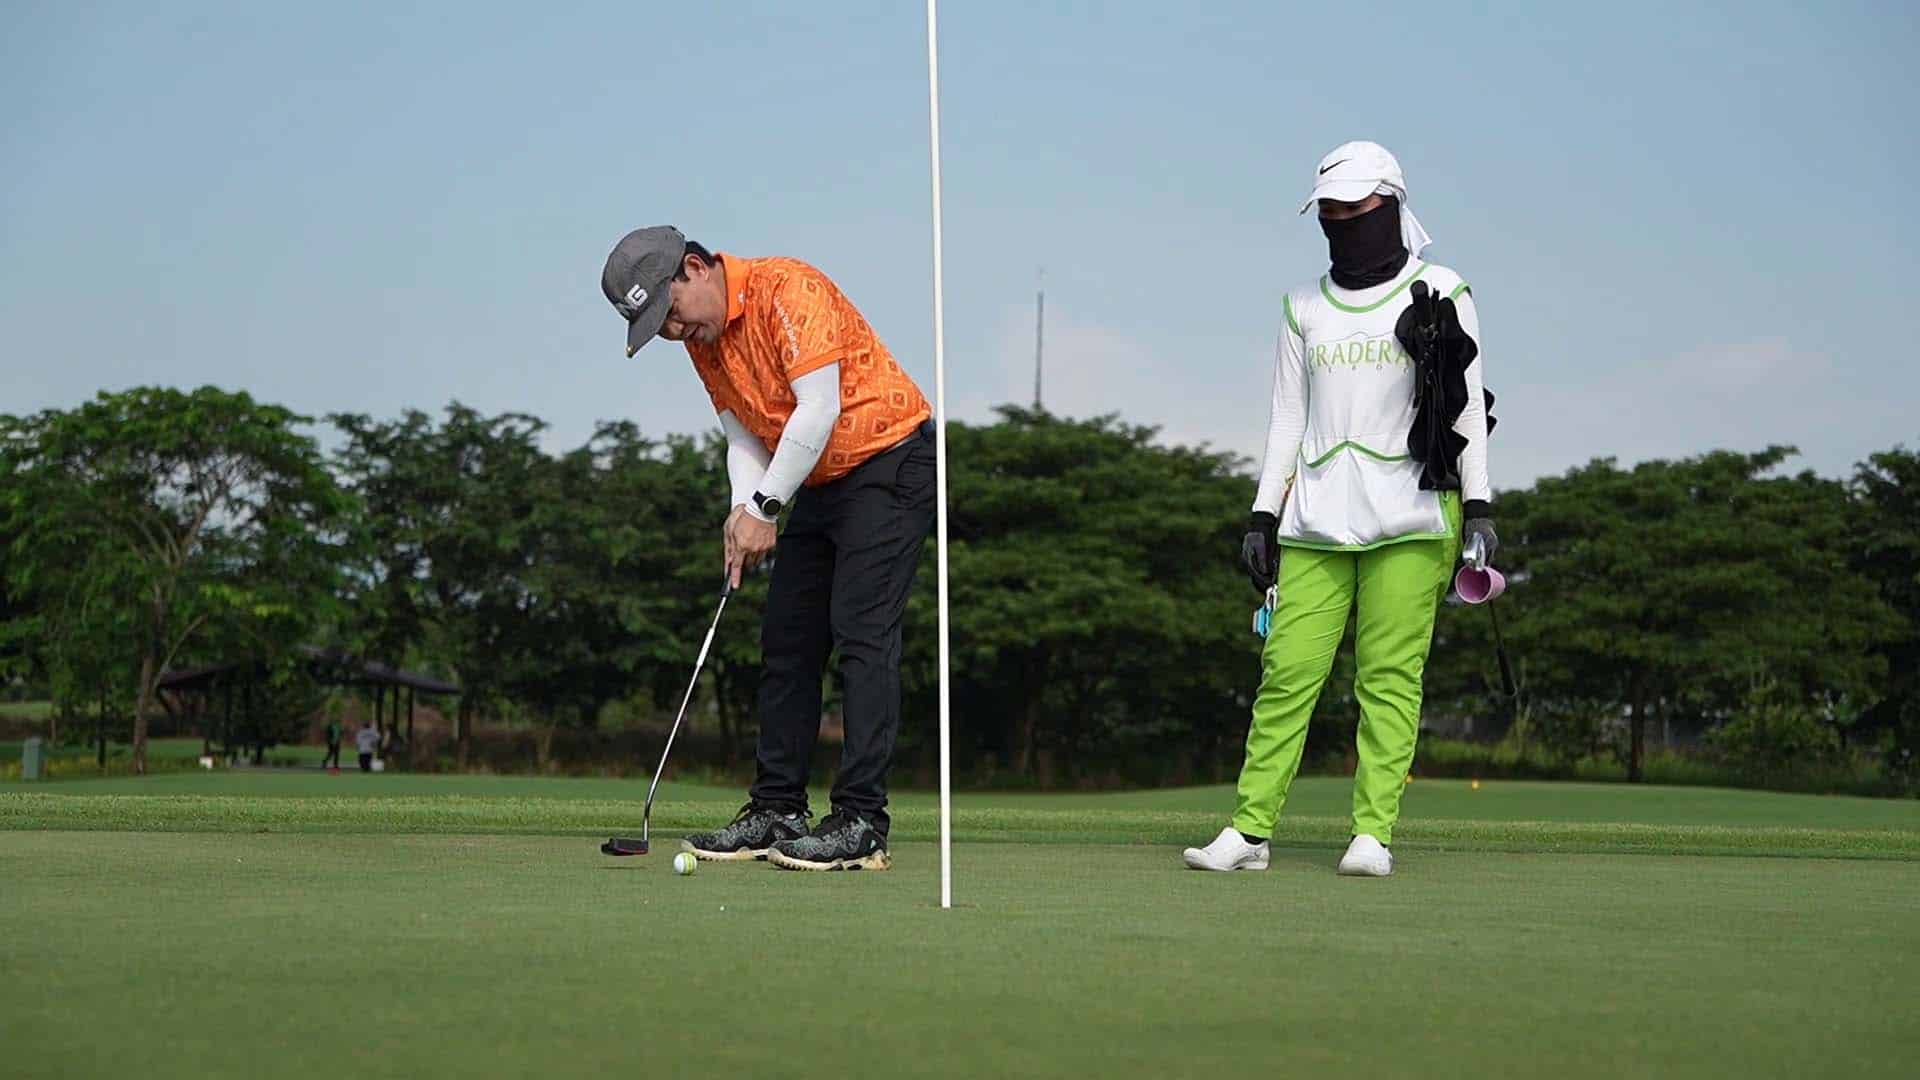 INC Unity Games golfers’ tourney held in Pampanga